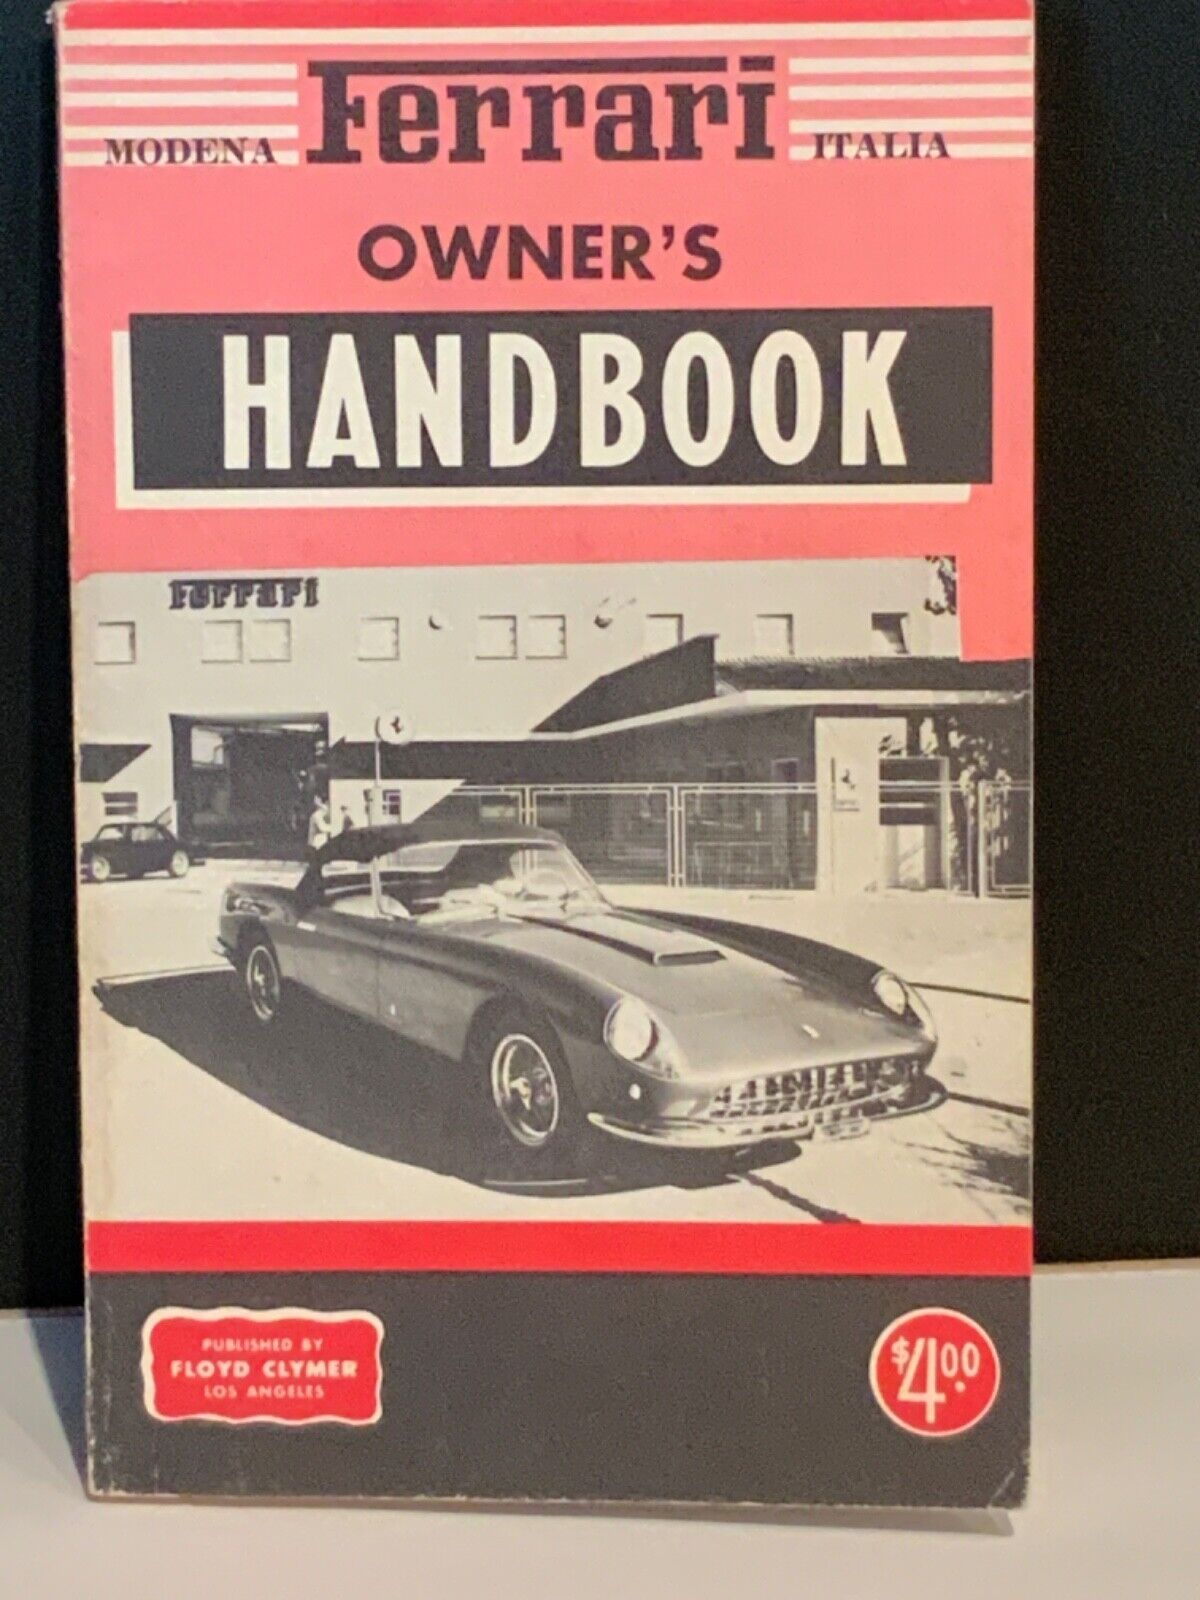 Ferrari Owner's Handbook by Hans Tanner  Floyd Clymer Pub.  Rare hand book  #700